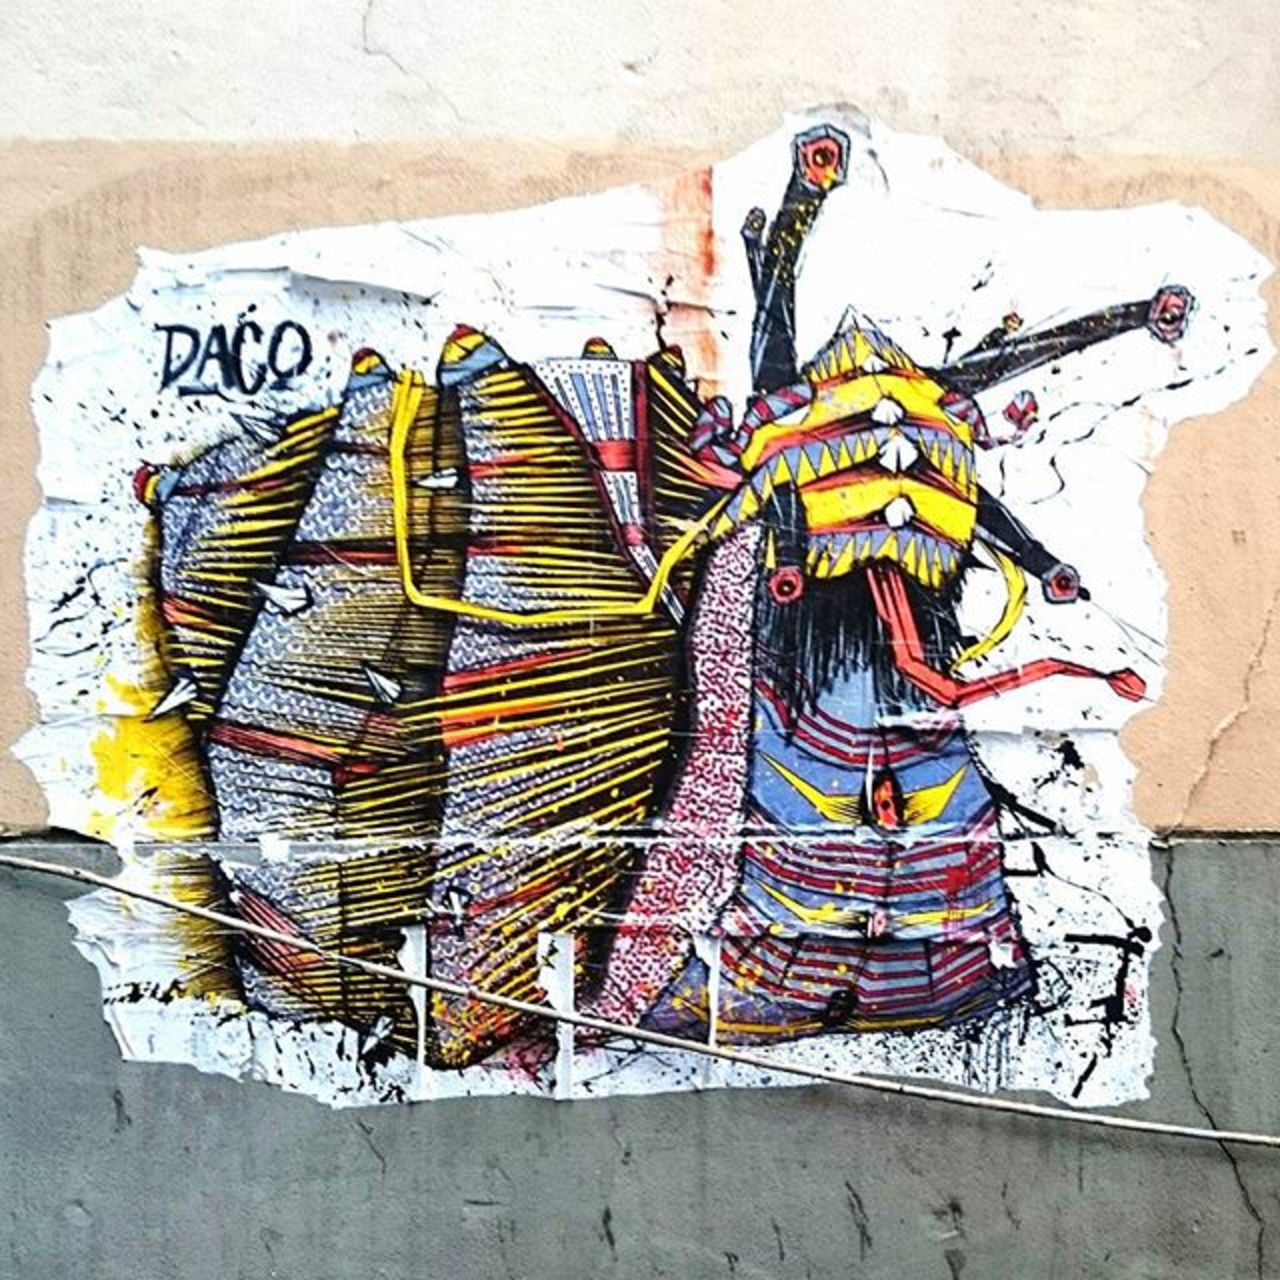 #Instagram - http://mystreetart.paris/connaissez-vous-cet-artiste-do-you-know-this-artist/ #MyStreetArtParis #streetart #love #graffiti https://t.co/zAAfLbSDQ0